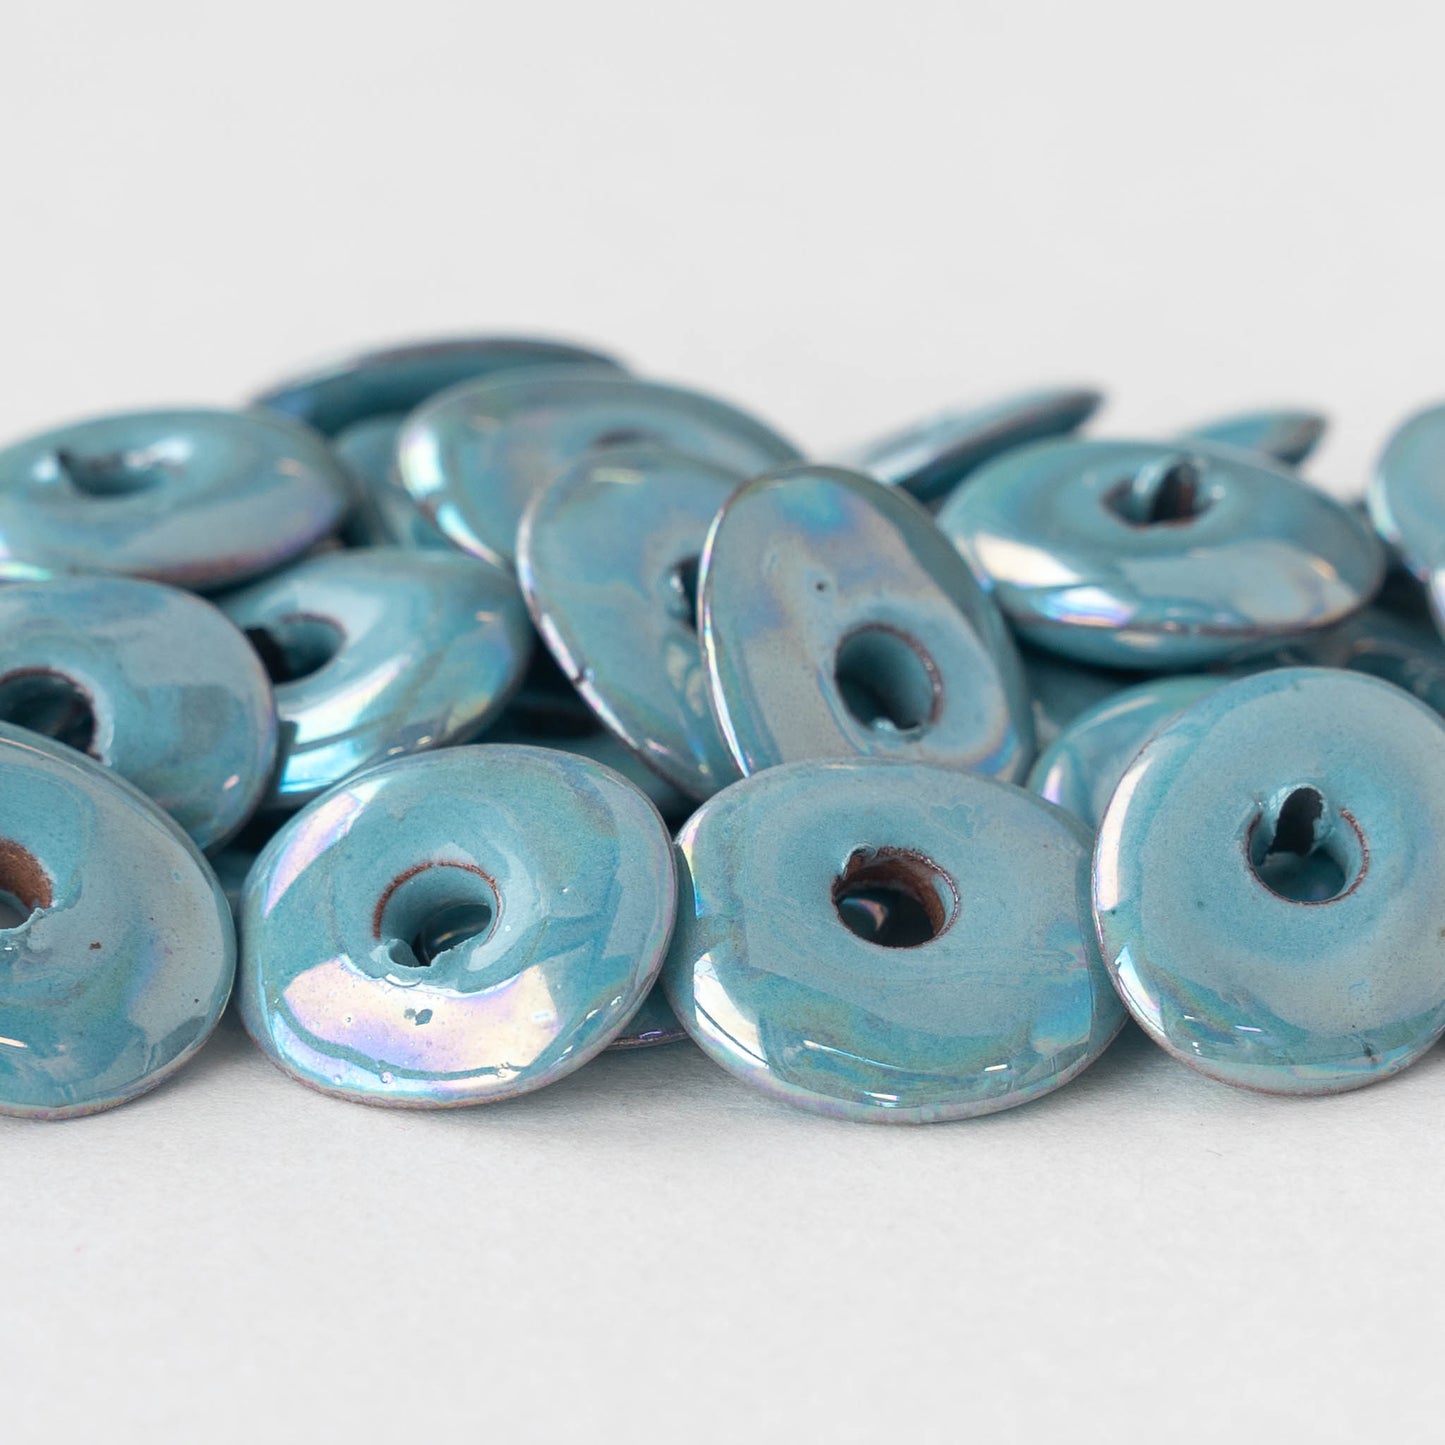 13-18mm Shiny Glazed Ceramic Disk Beads - Iridescent  Blue Luster